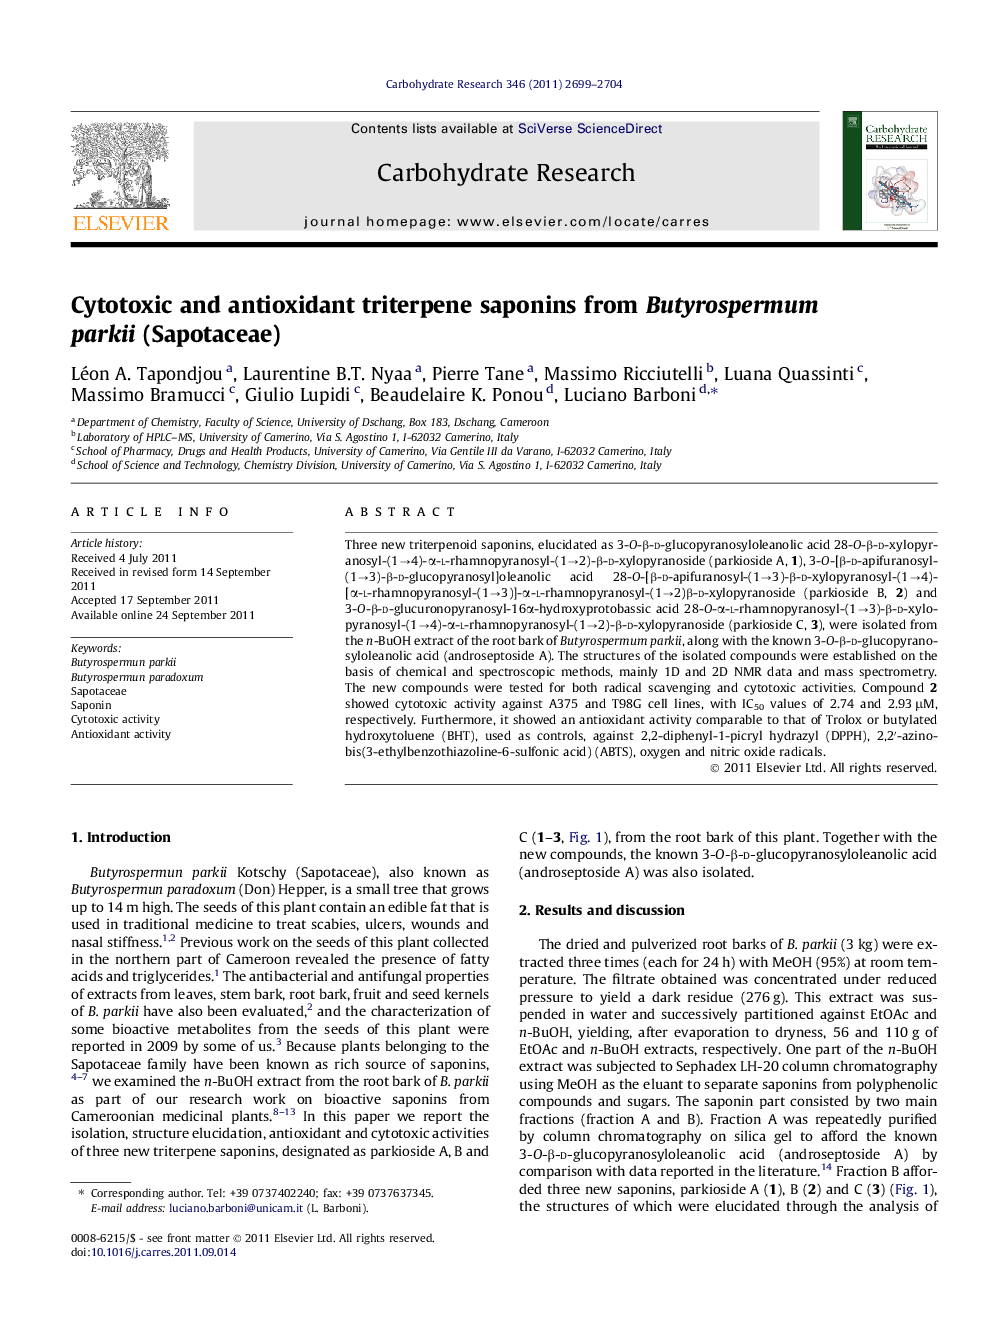 Cytotoxic and antioxidant triterpene saponins from Butyrospermum parkii (Sapotaceae)